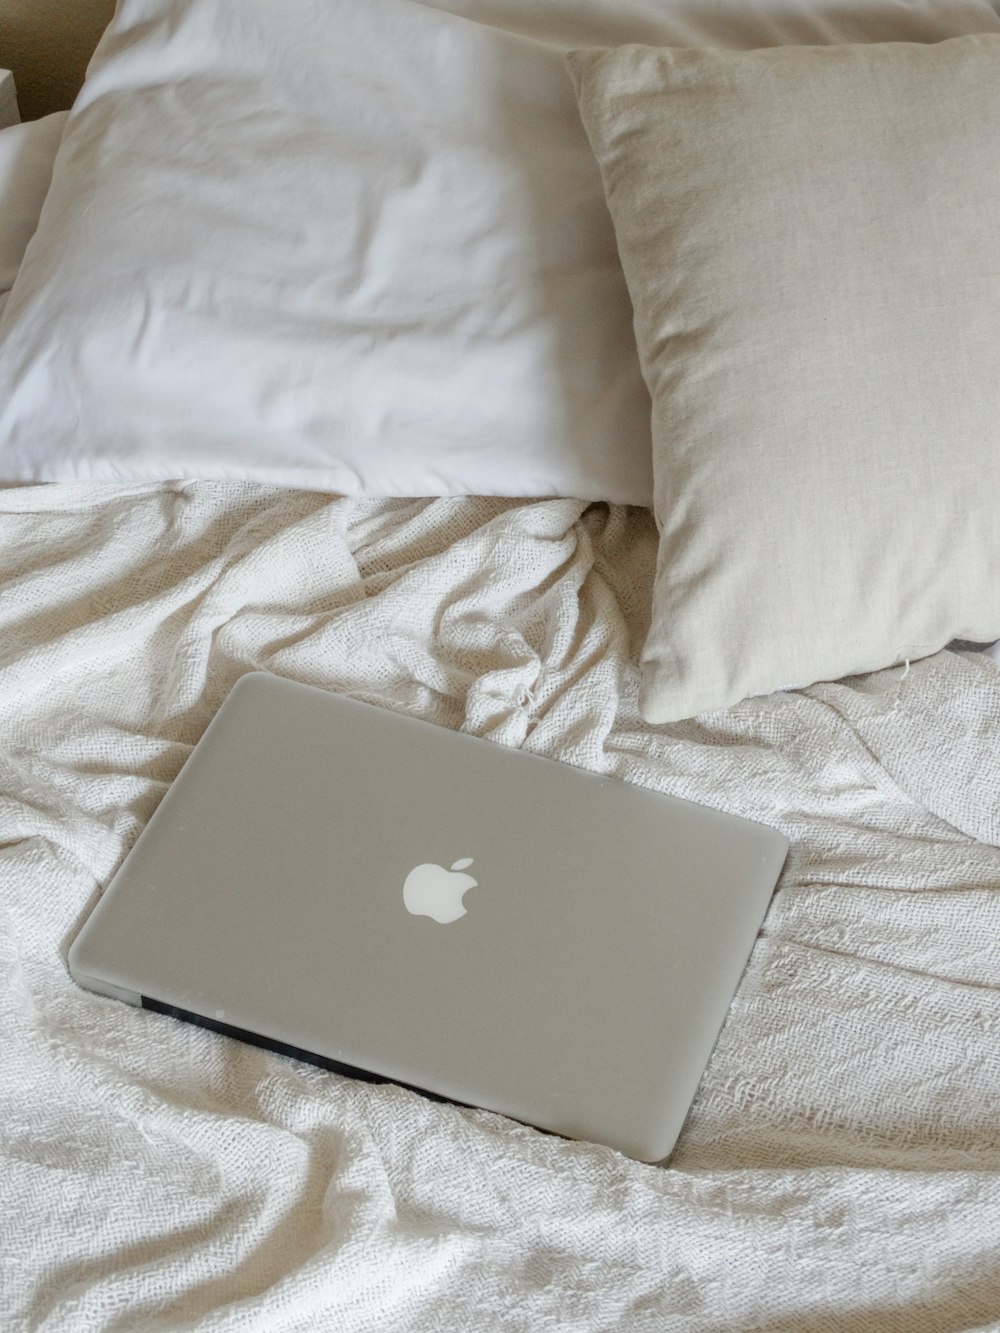 MacBook argentato su tessuto bianco